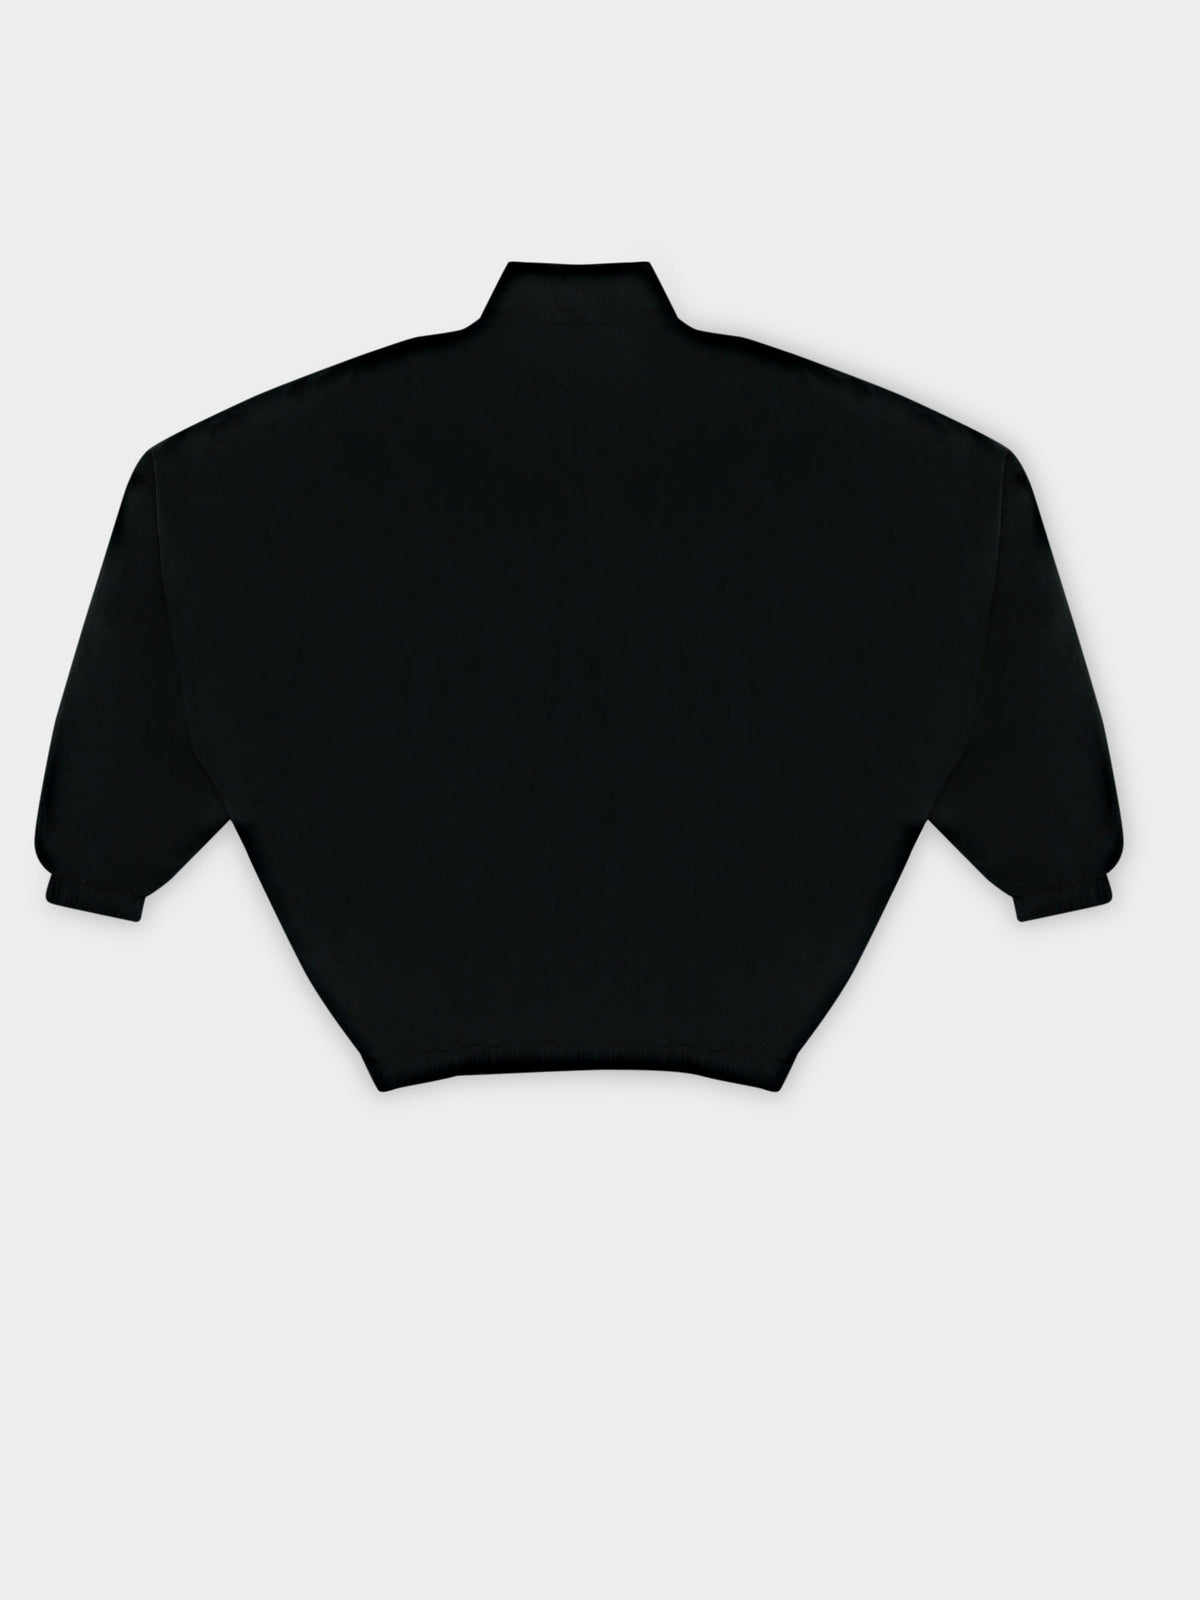 Sportswear Essential Woven Jacket in Black &amp; White